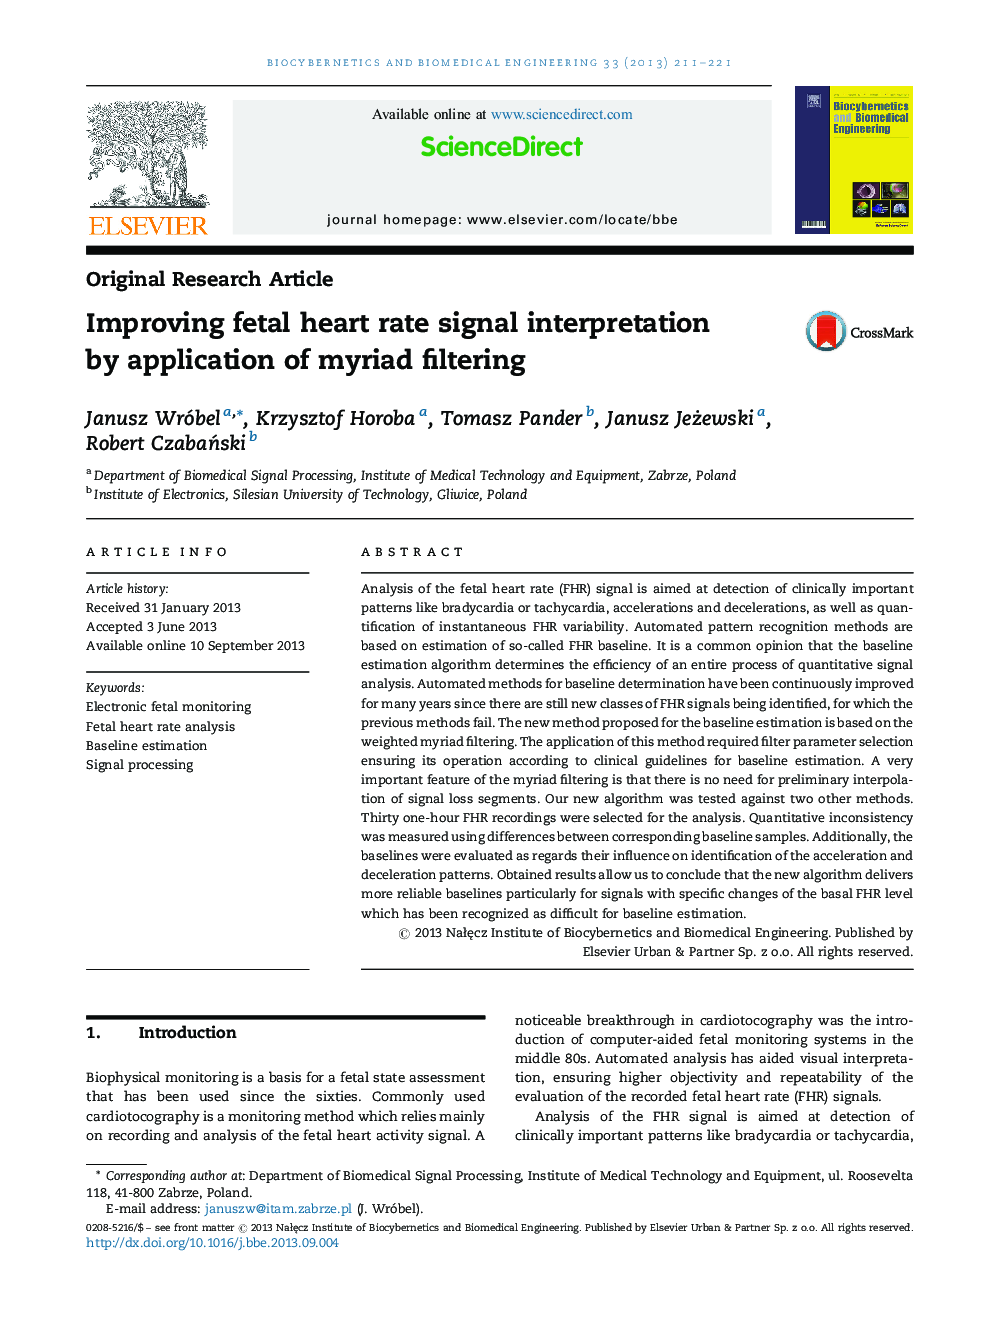 Improving fetal heart rate signal interpretation by application of myriad filtering